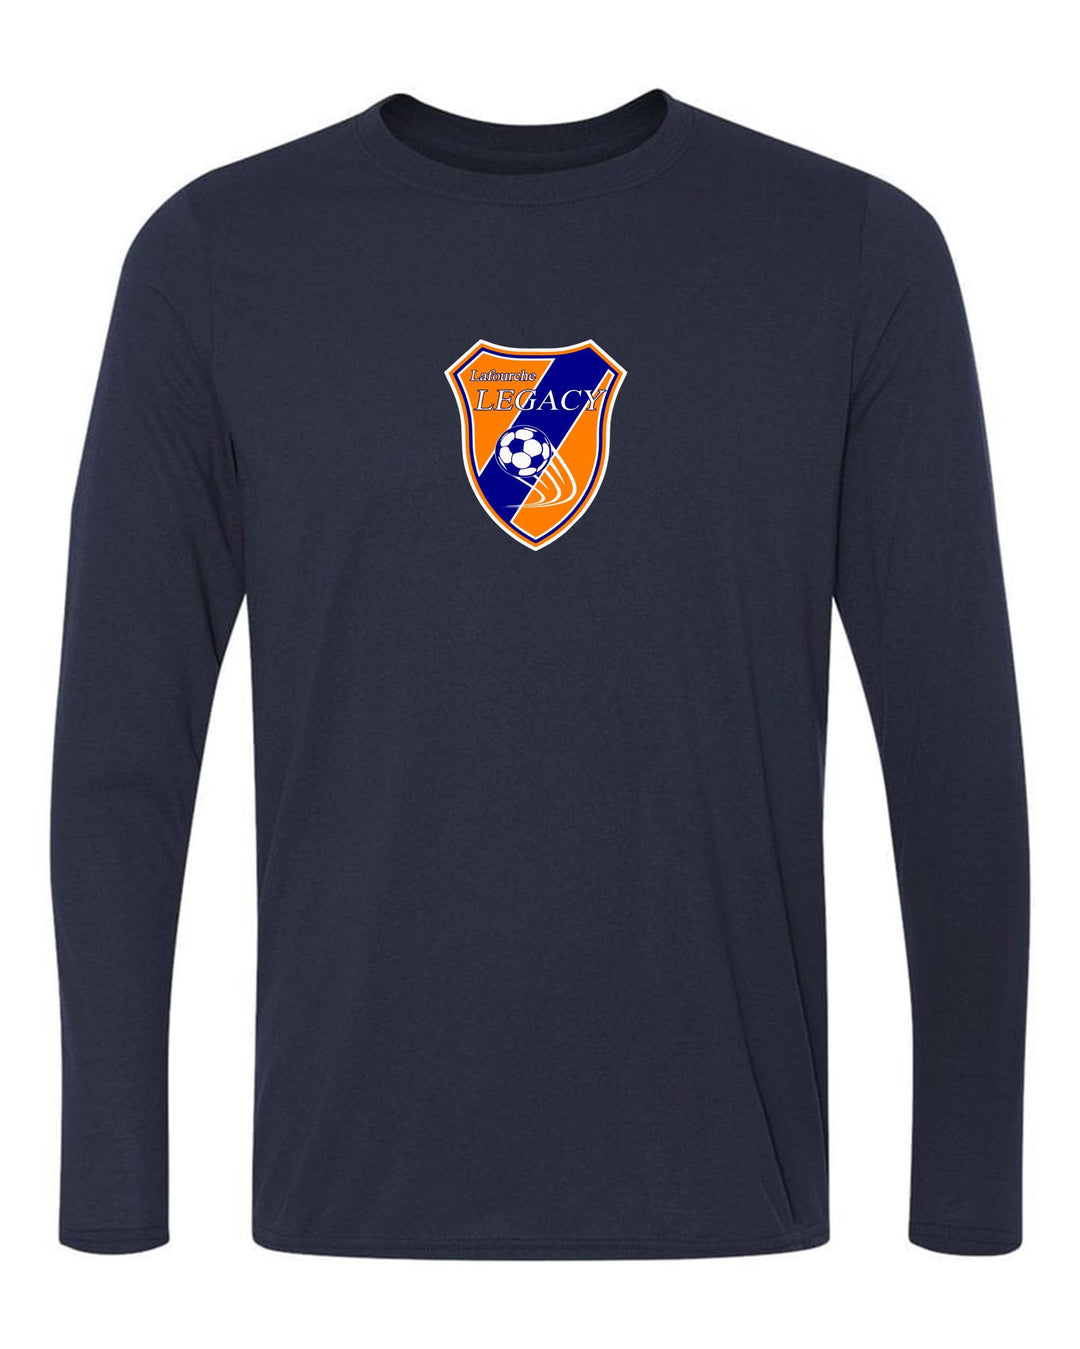 Lefourche Legacy Long-sleeve T-shirt - Navy or Orange  YOUTH EXTRA LARGE NAVY - Third Coast Soccer